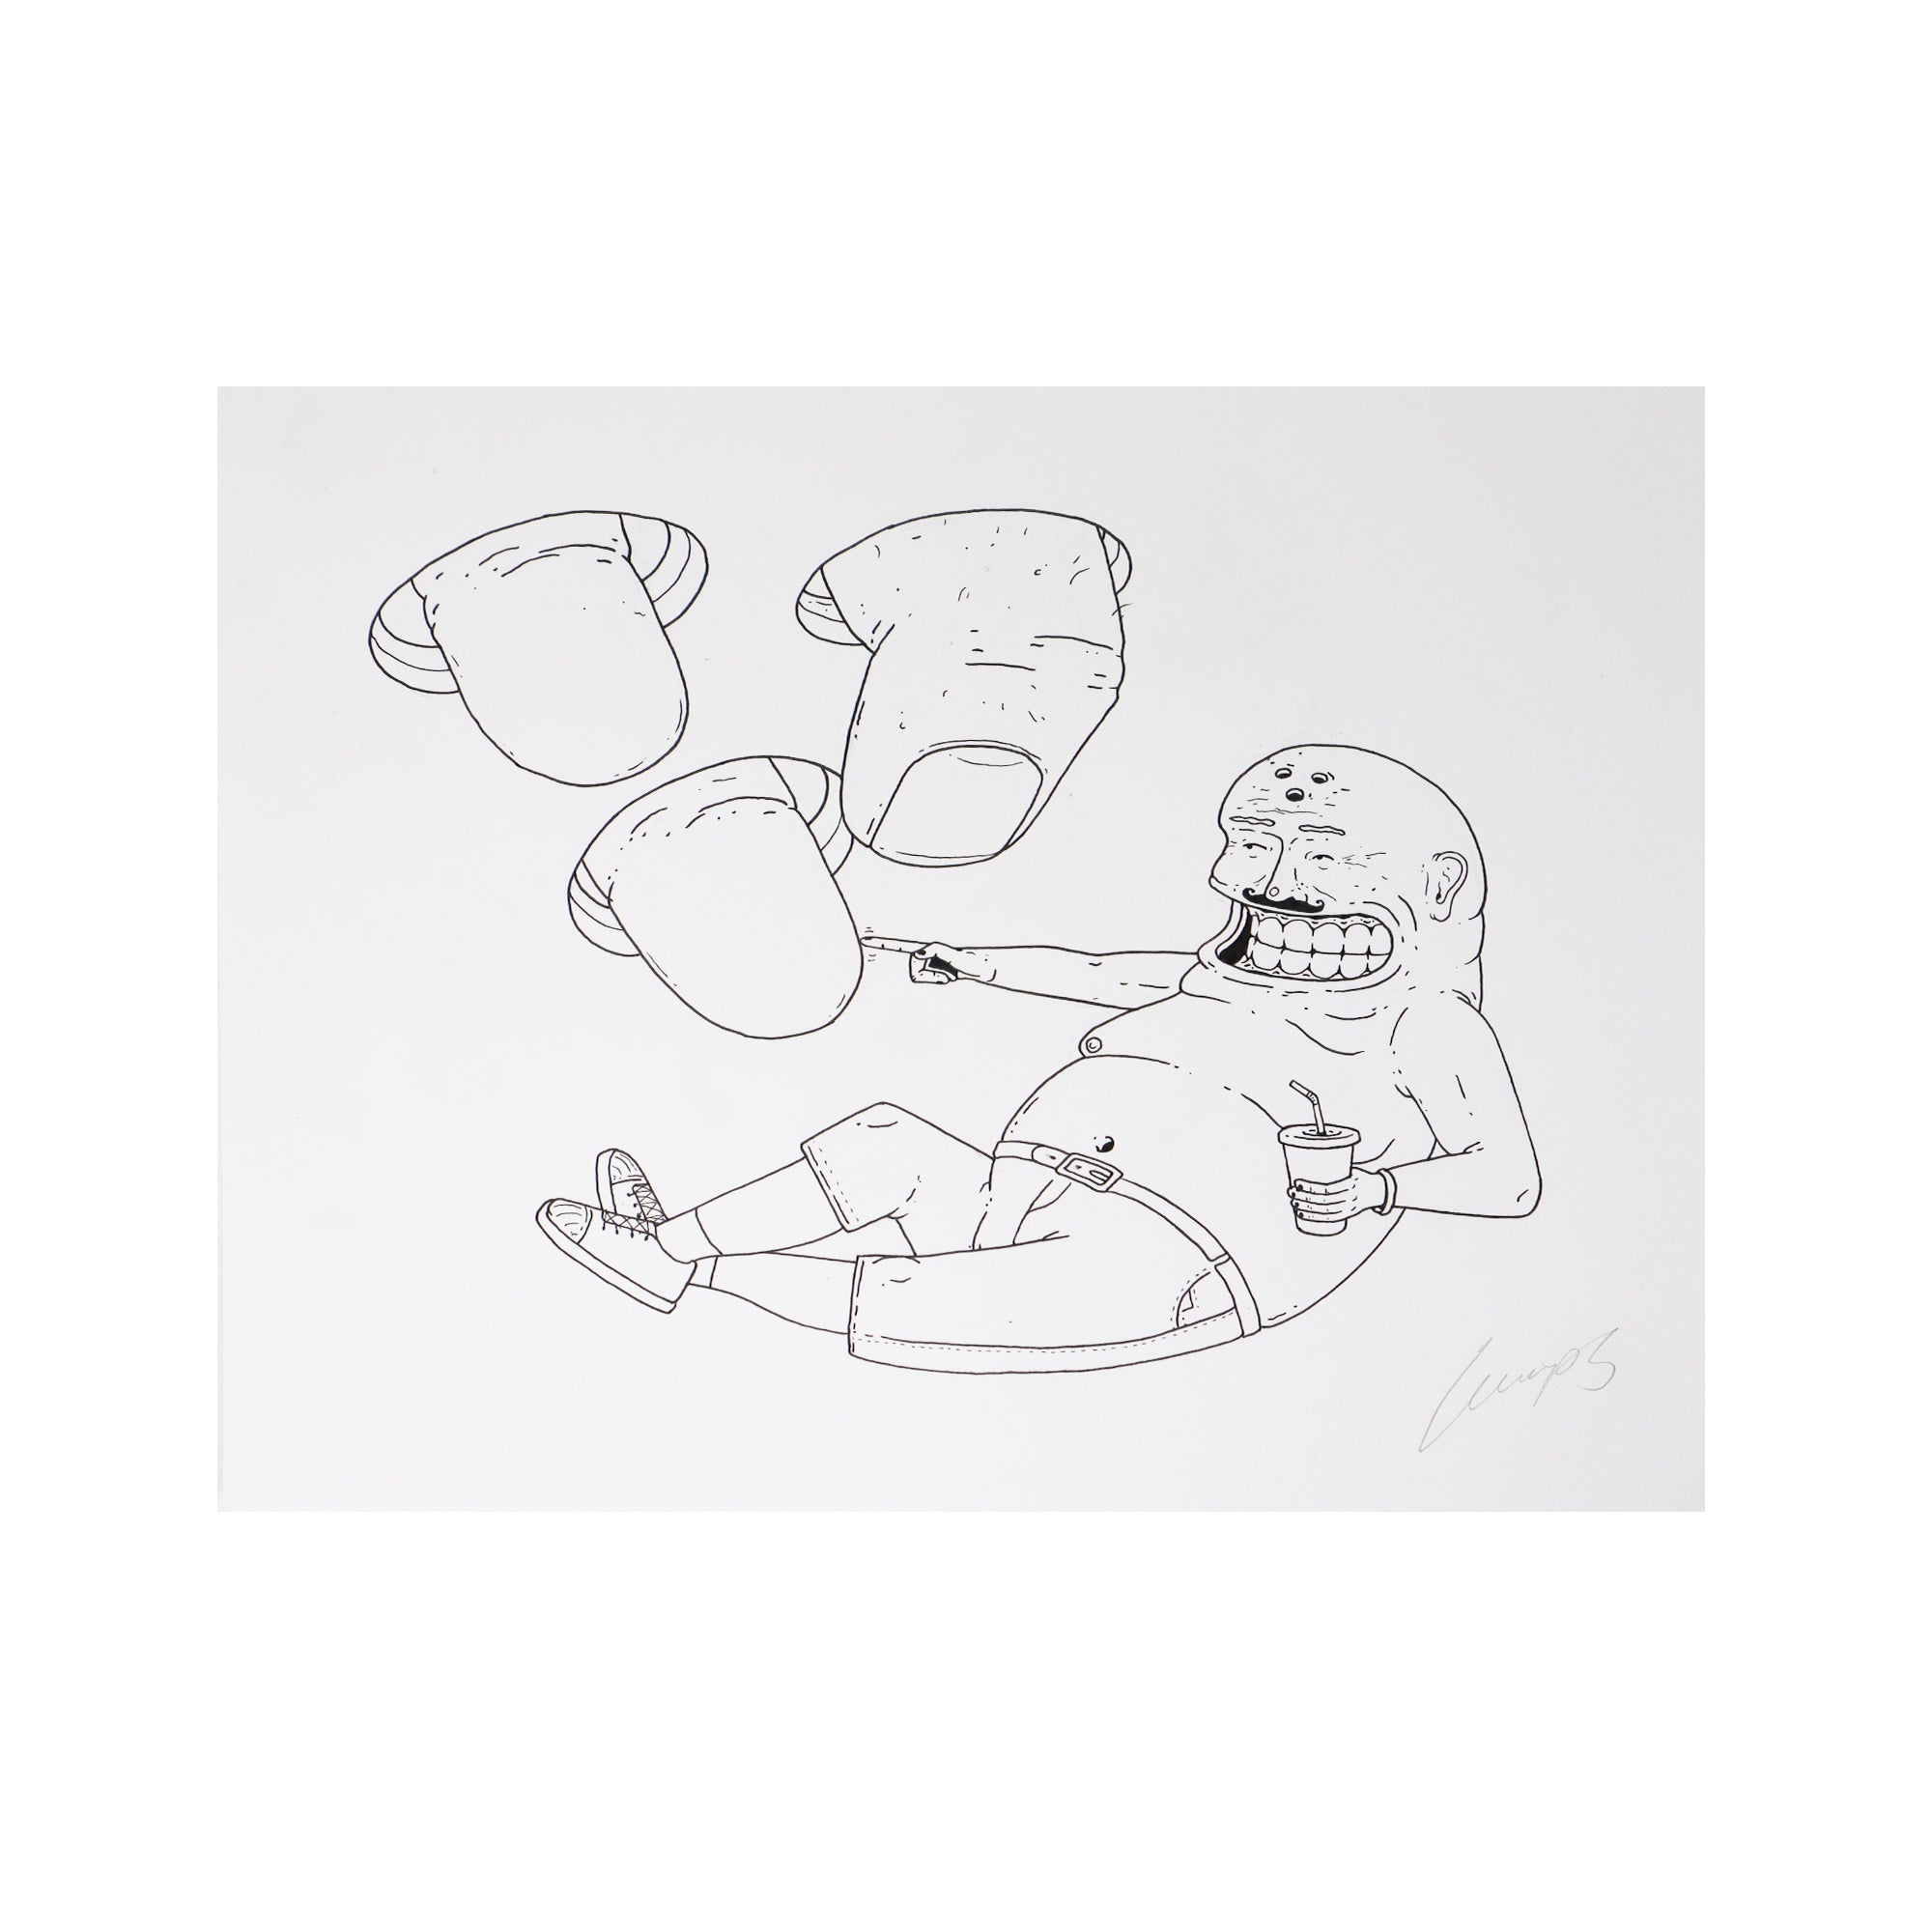 "Bowling Ball", 2019 - Original Drawing